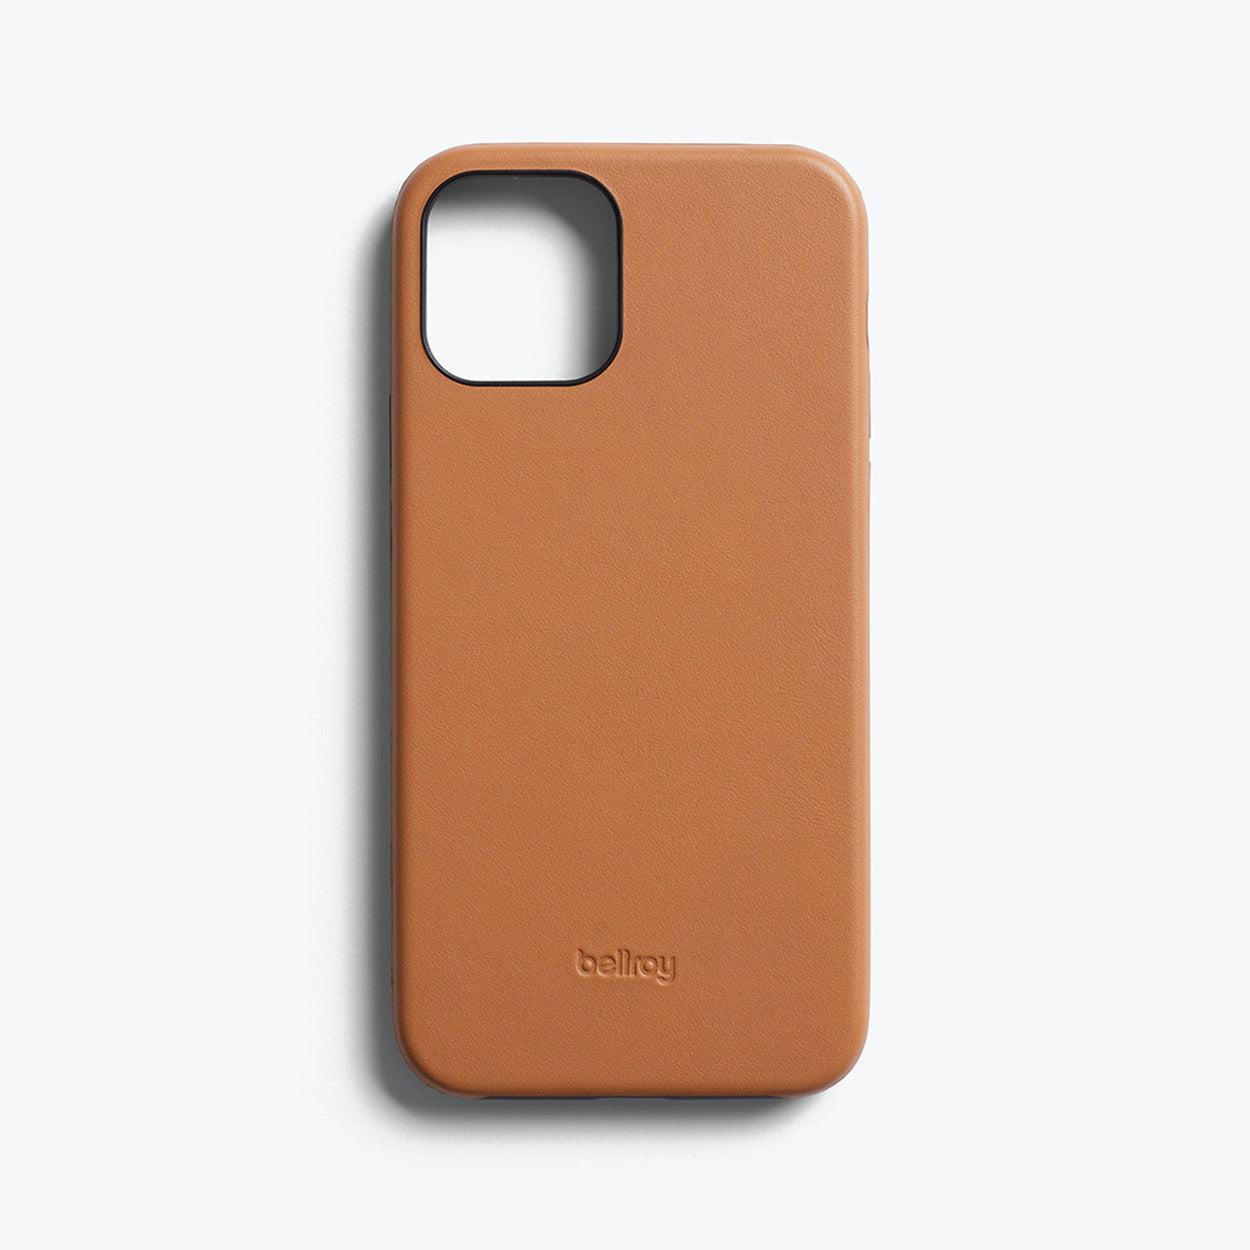 Bellroy Slim Genuine Leather Case For iPhone iPhone 12 mini - TOFFEE - Mac Addict